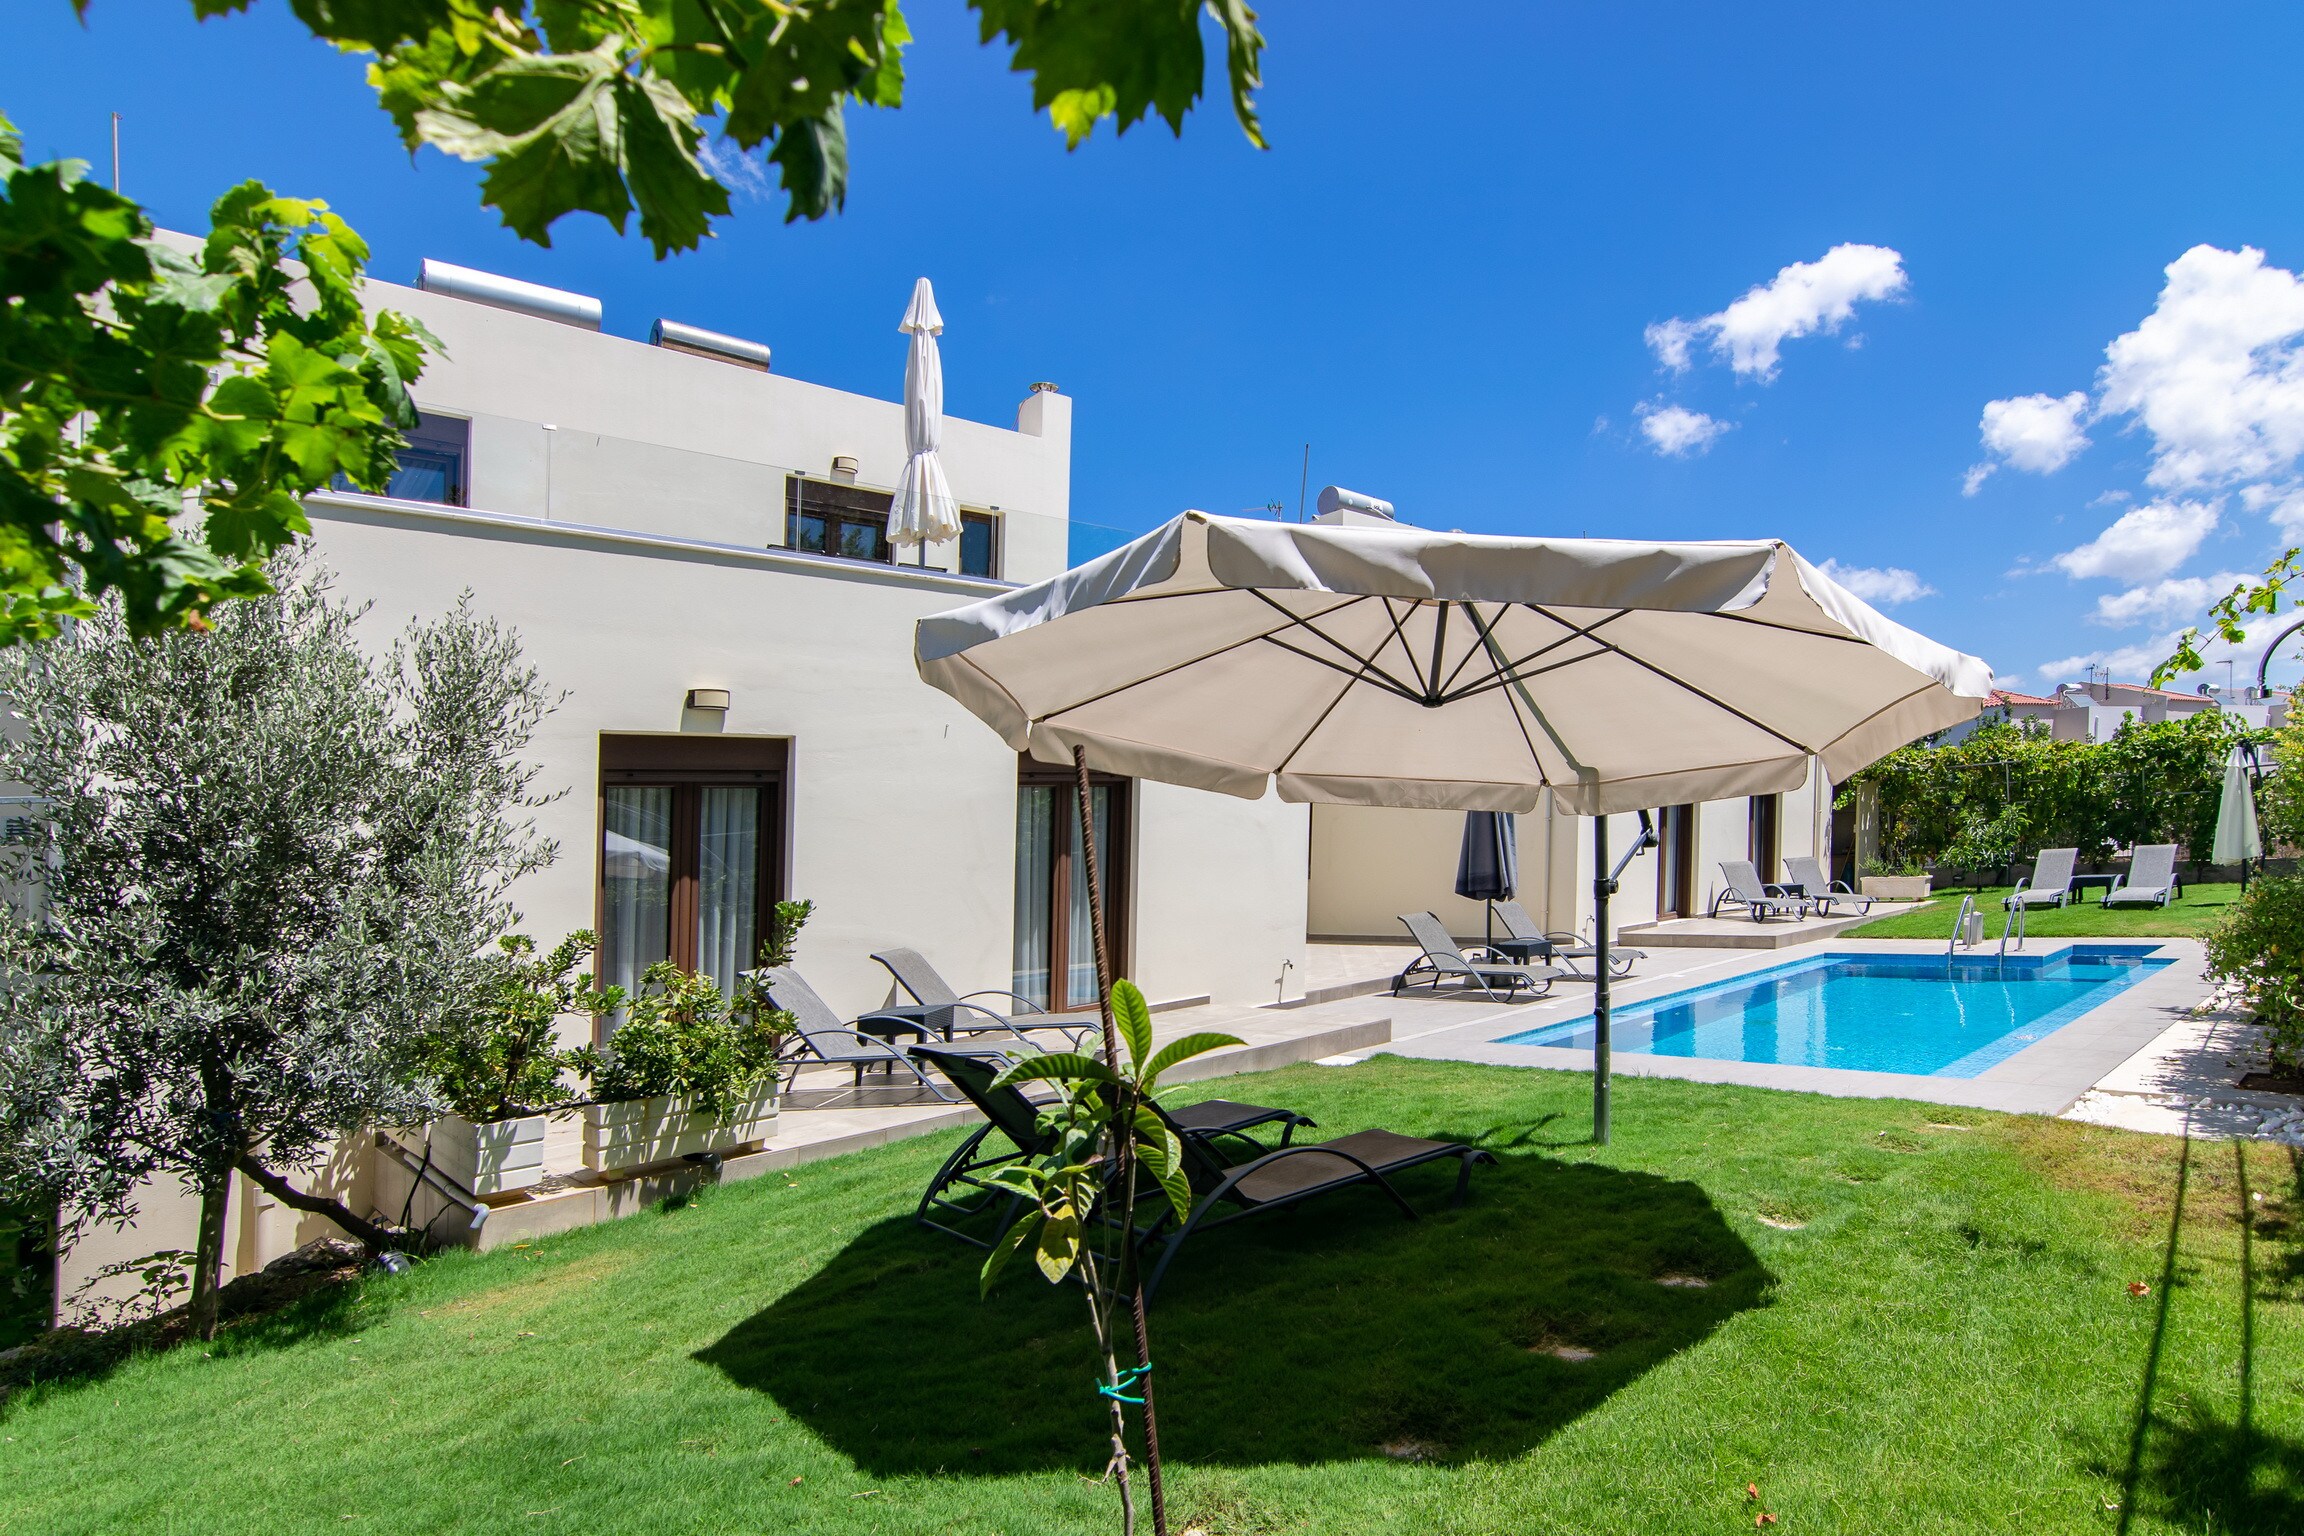 Swimming pool area of Large modern villa,Private Swimming pool,Rethymno,Crete